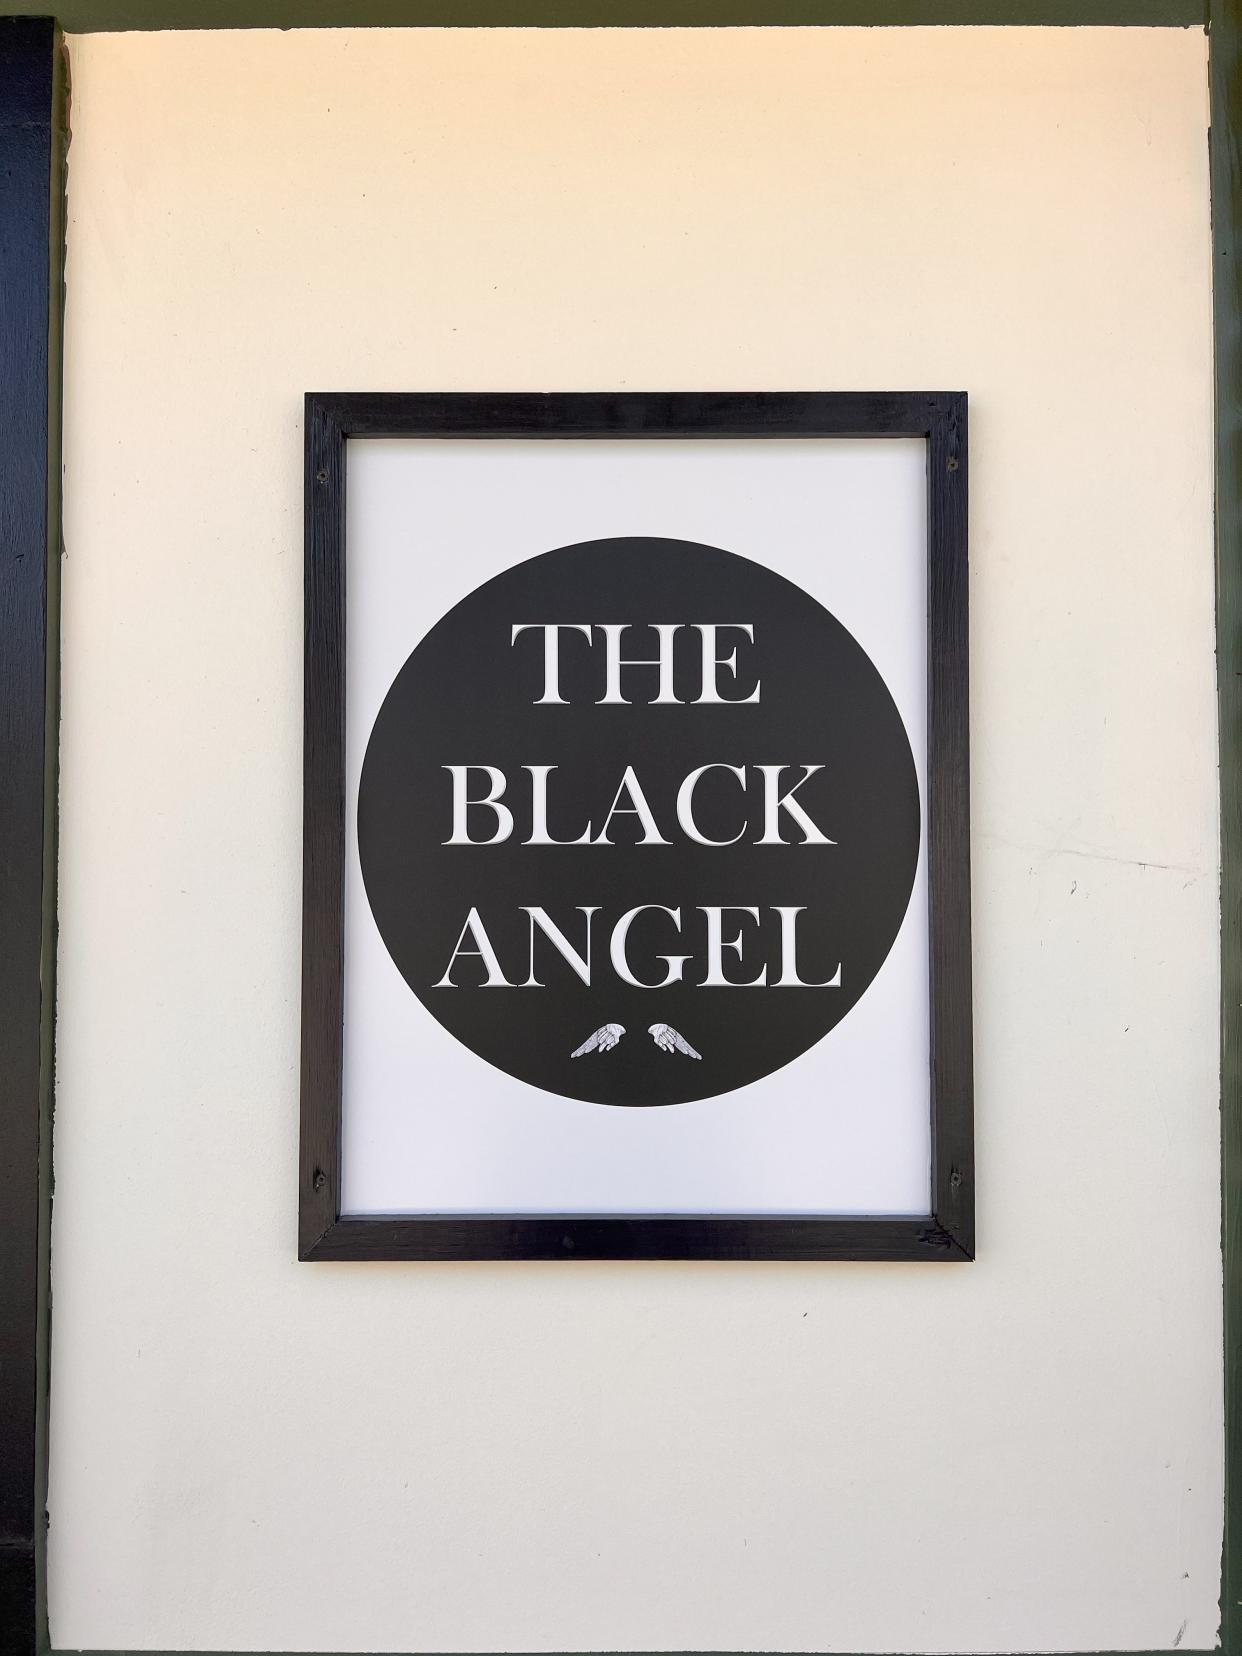 The Black Angel located at 630 Iowa Ave, Iowa City.